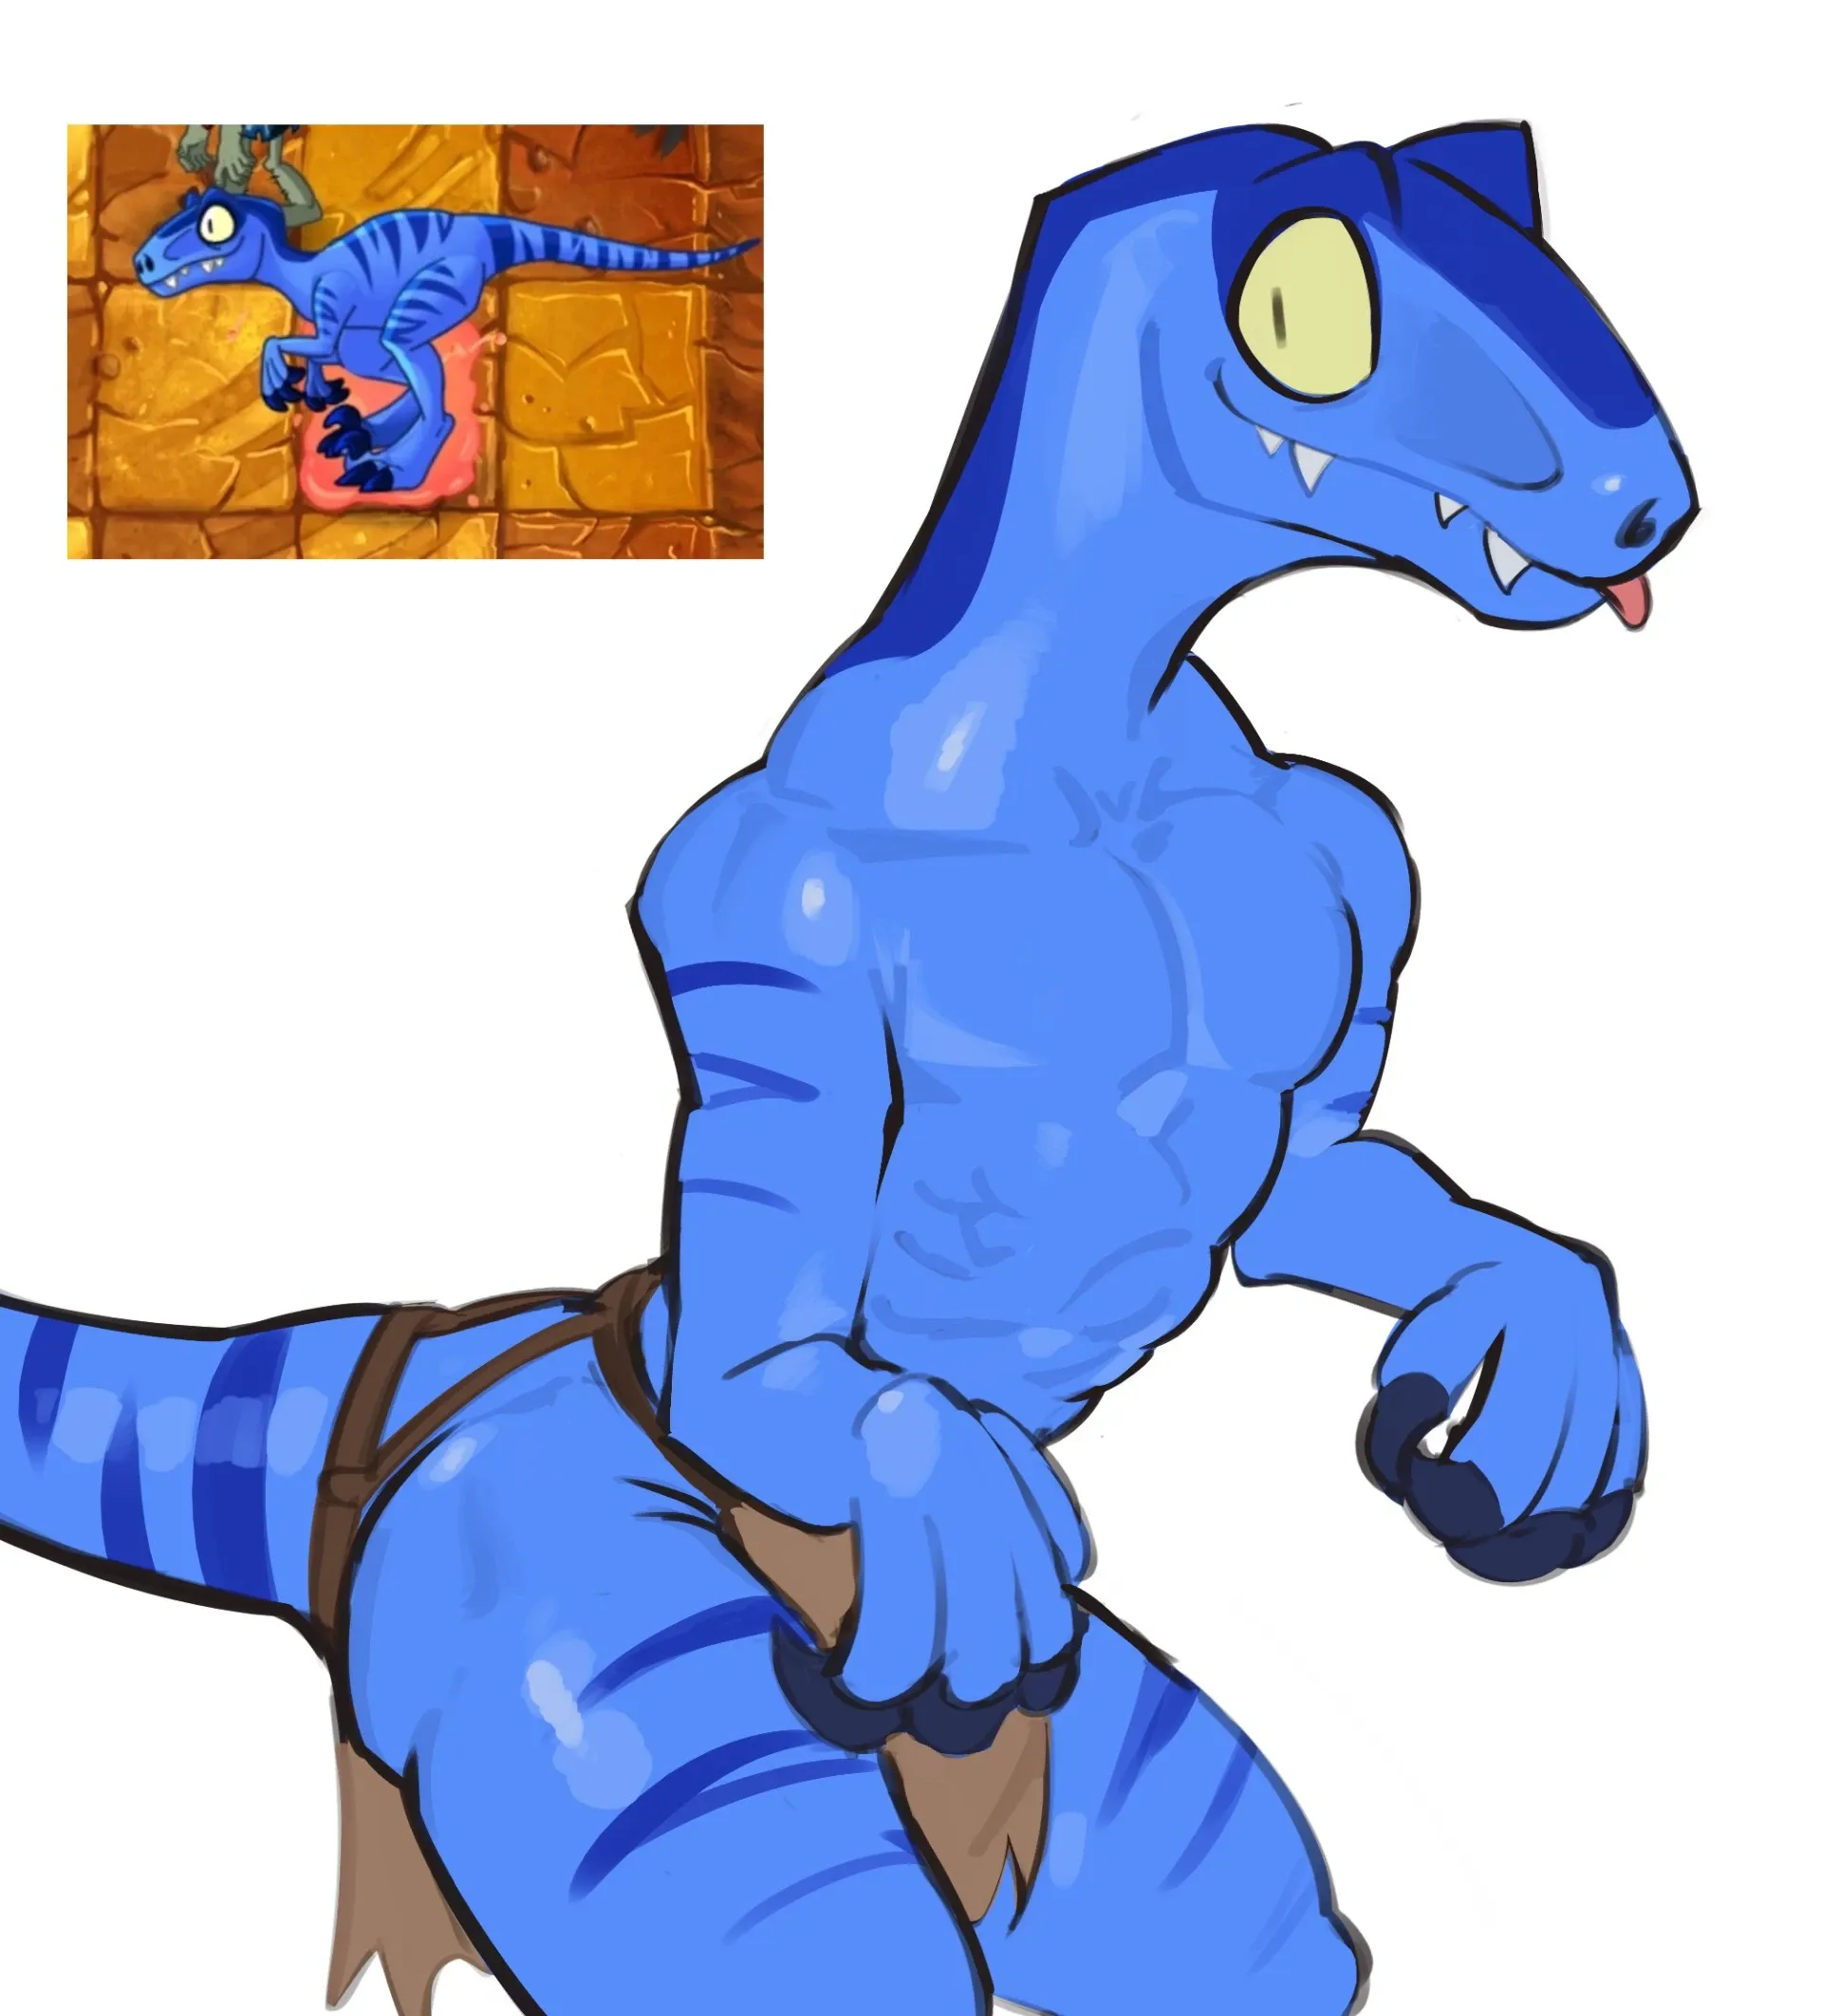 Avatar of Raptor